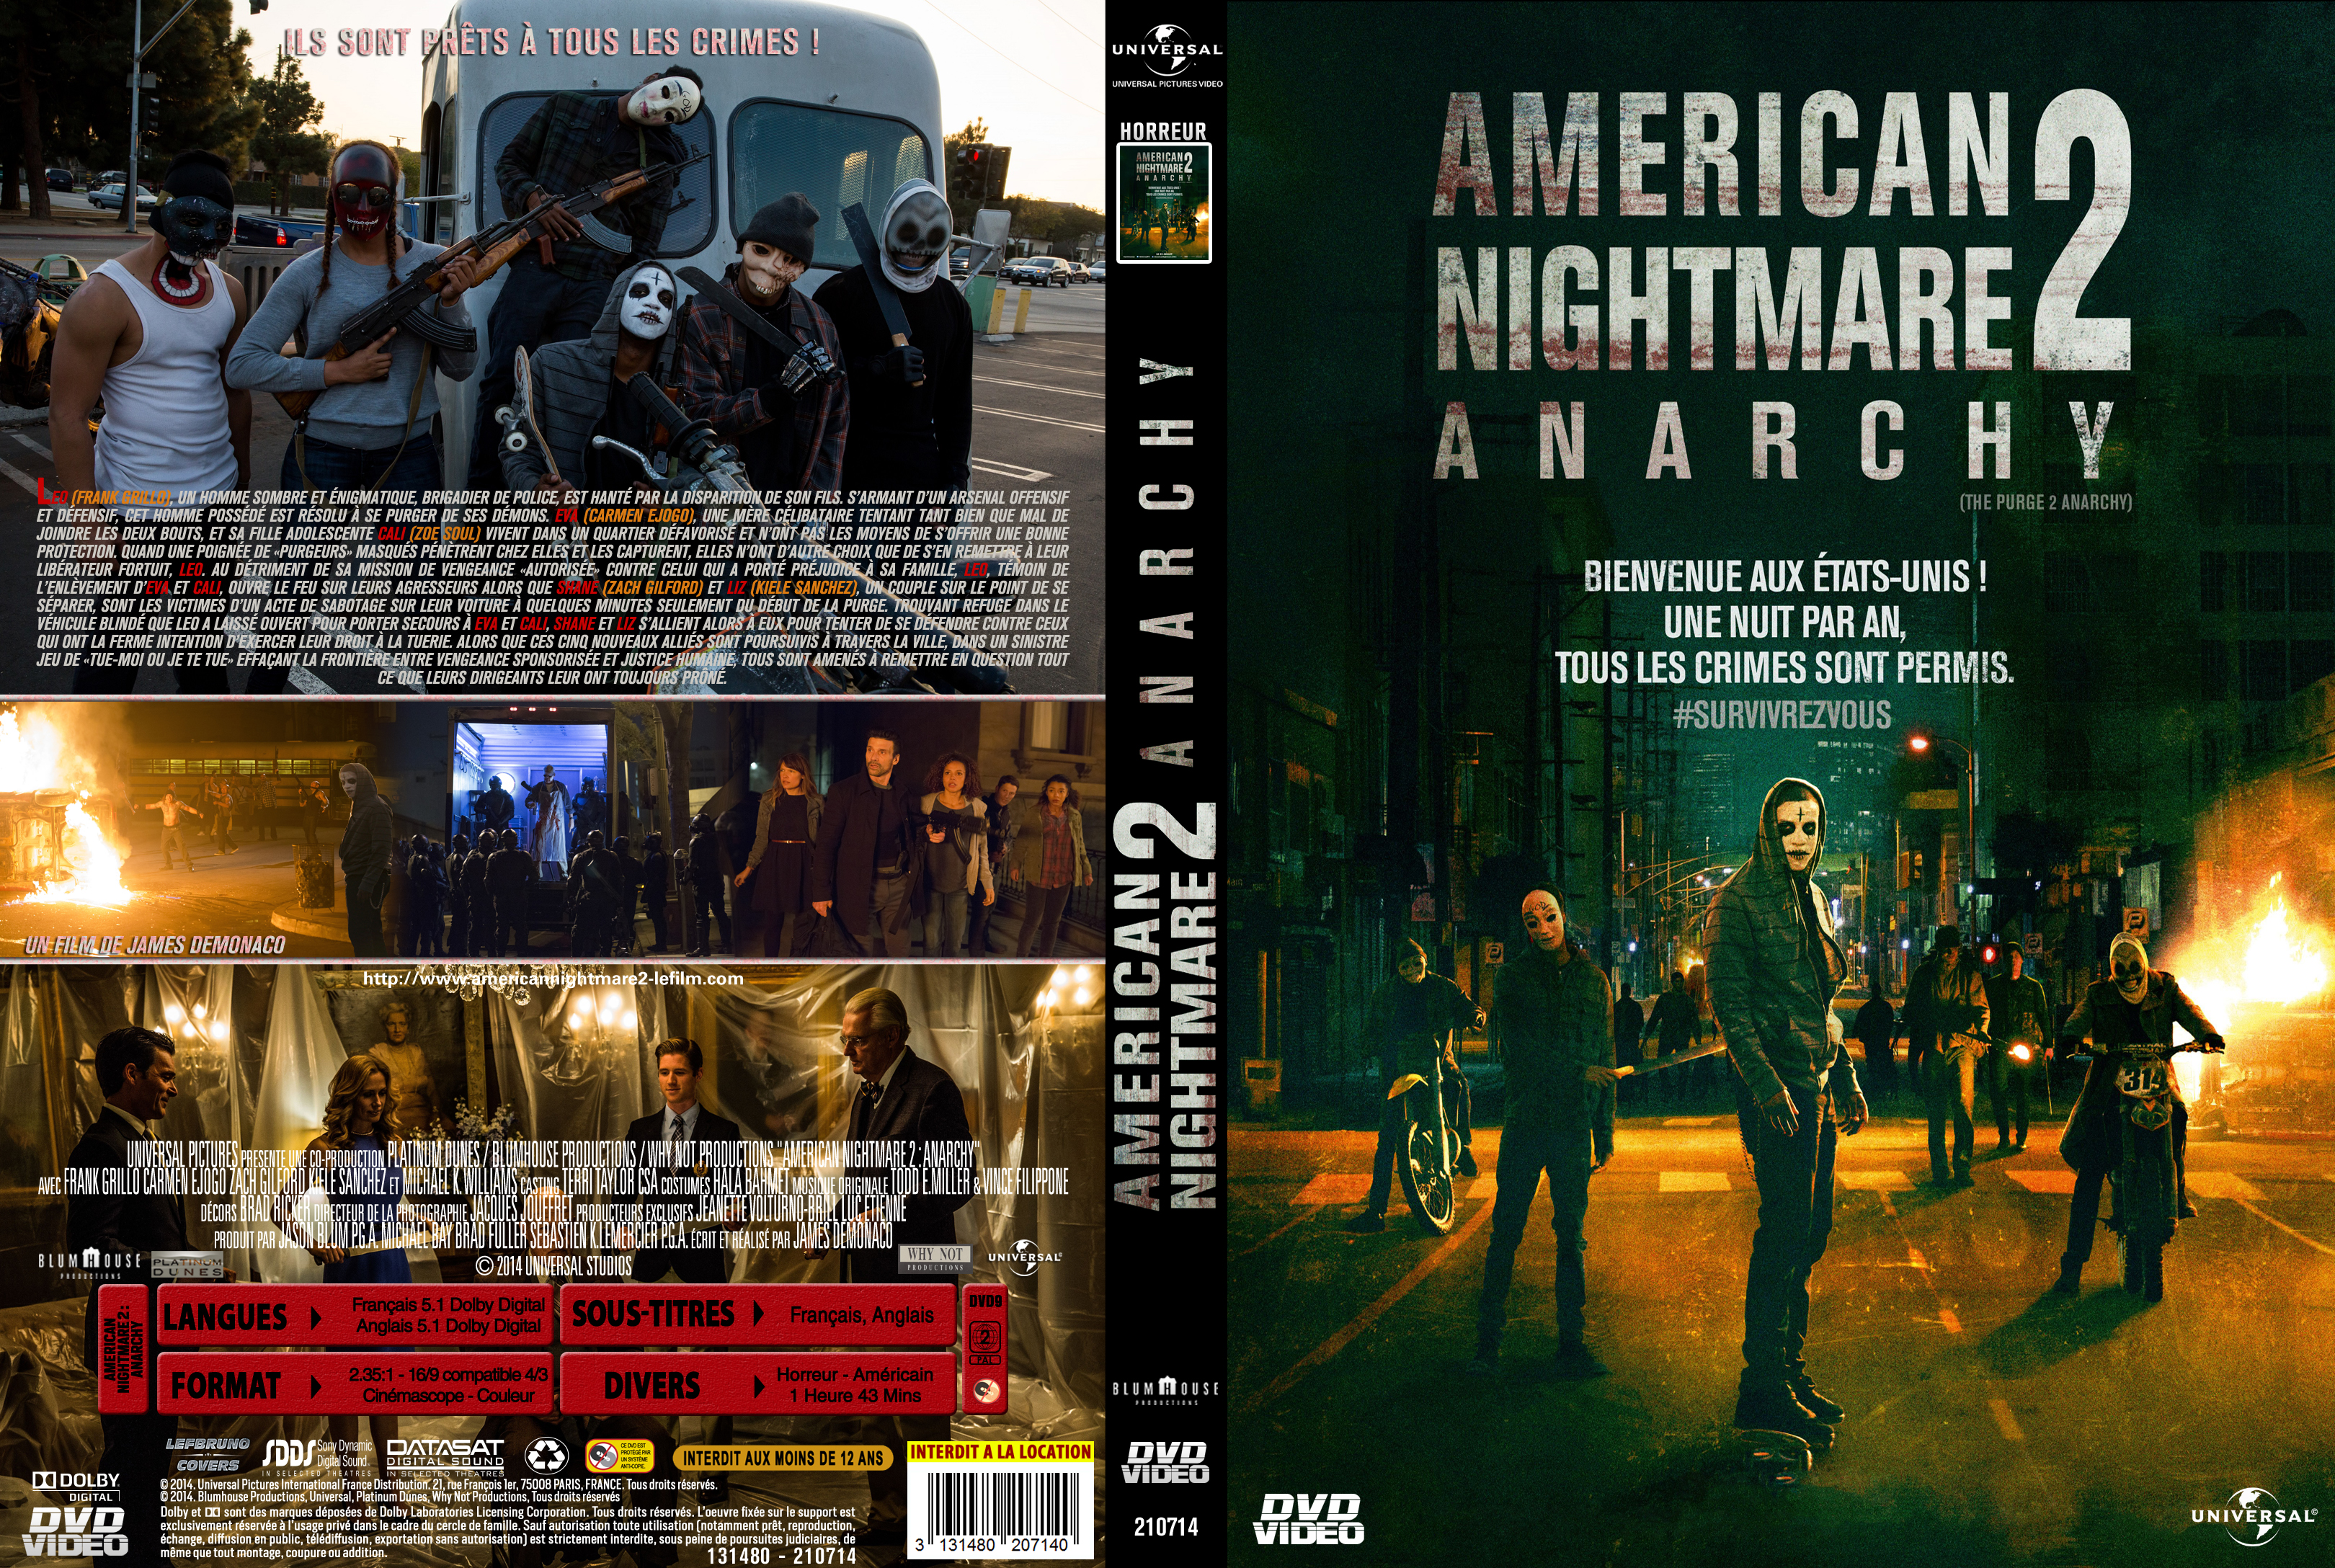 Jaquette DVD American Nightmare 2 custom